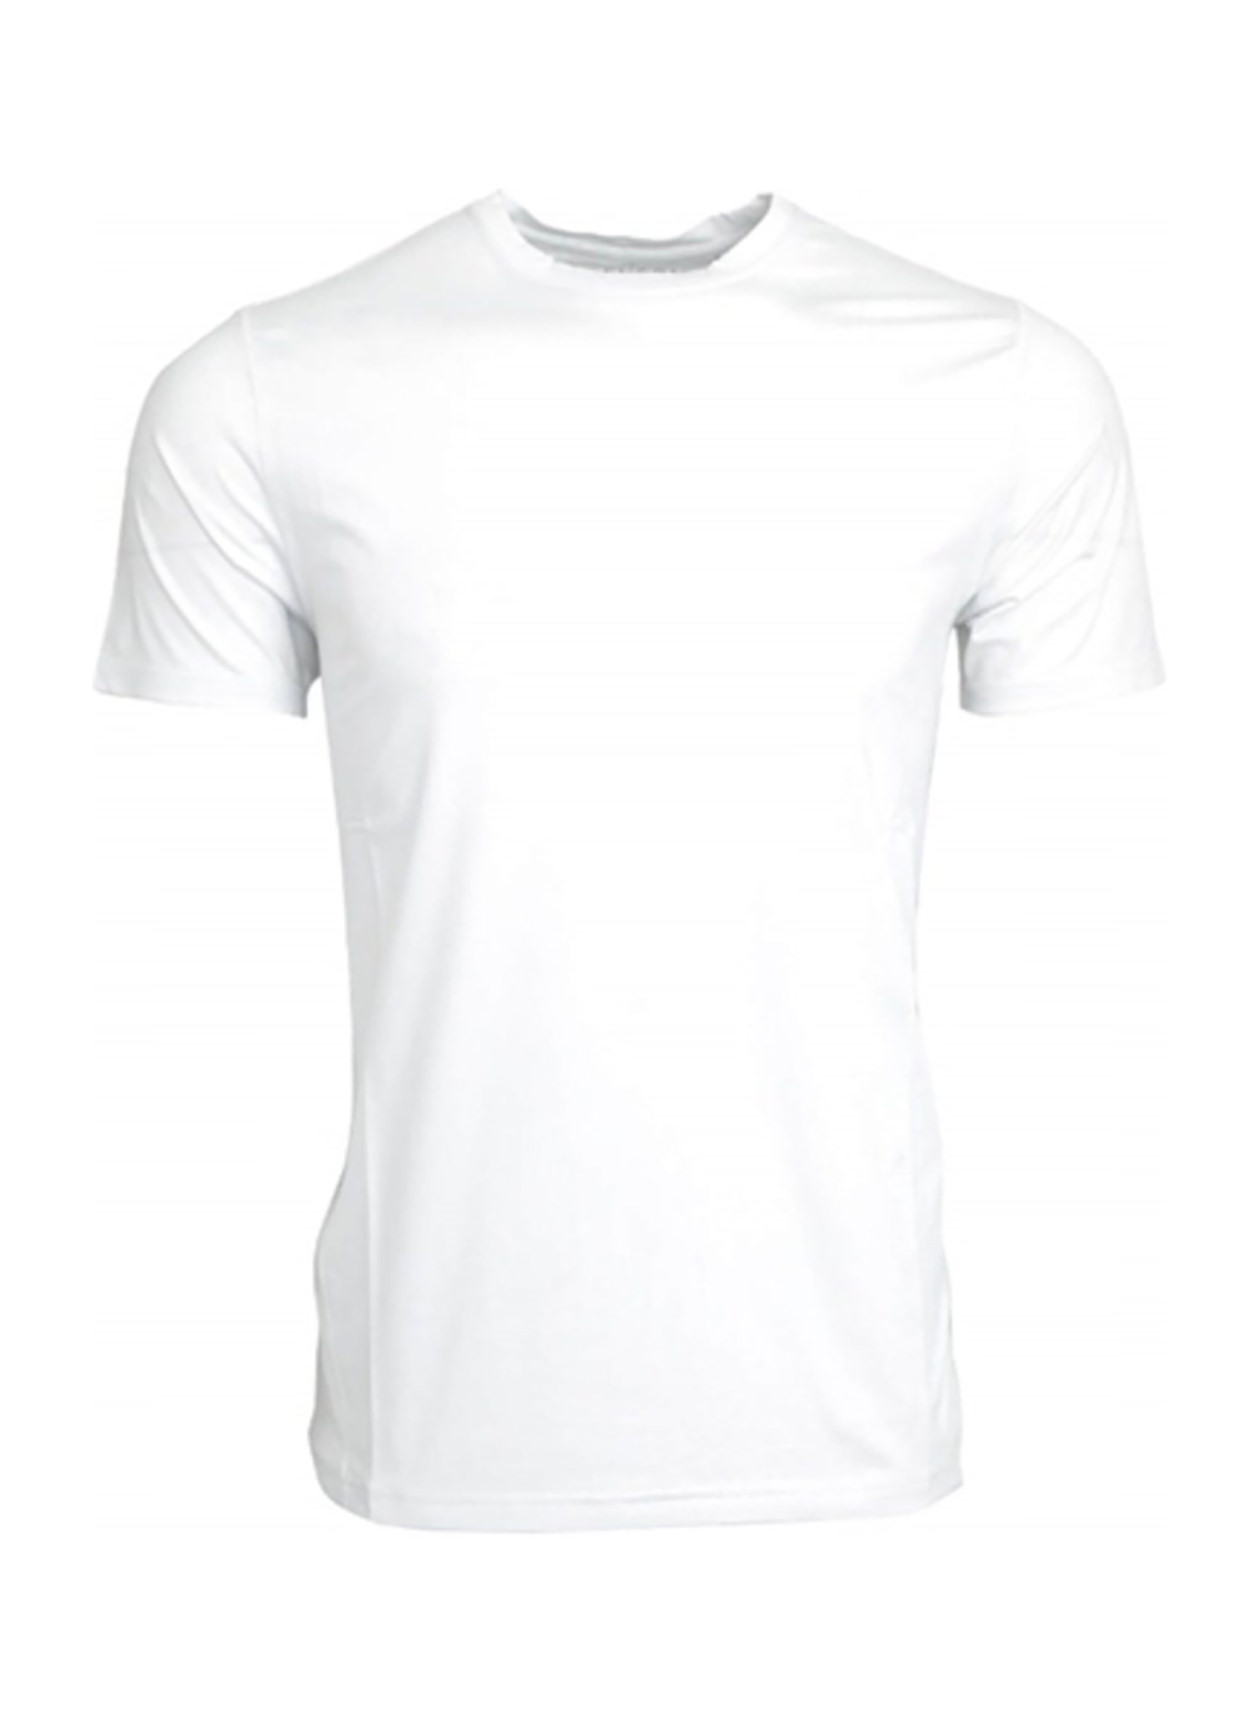 Greyson Men's Arctic Guide Sport T-Shirt